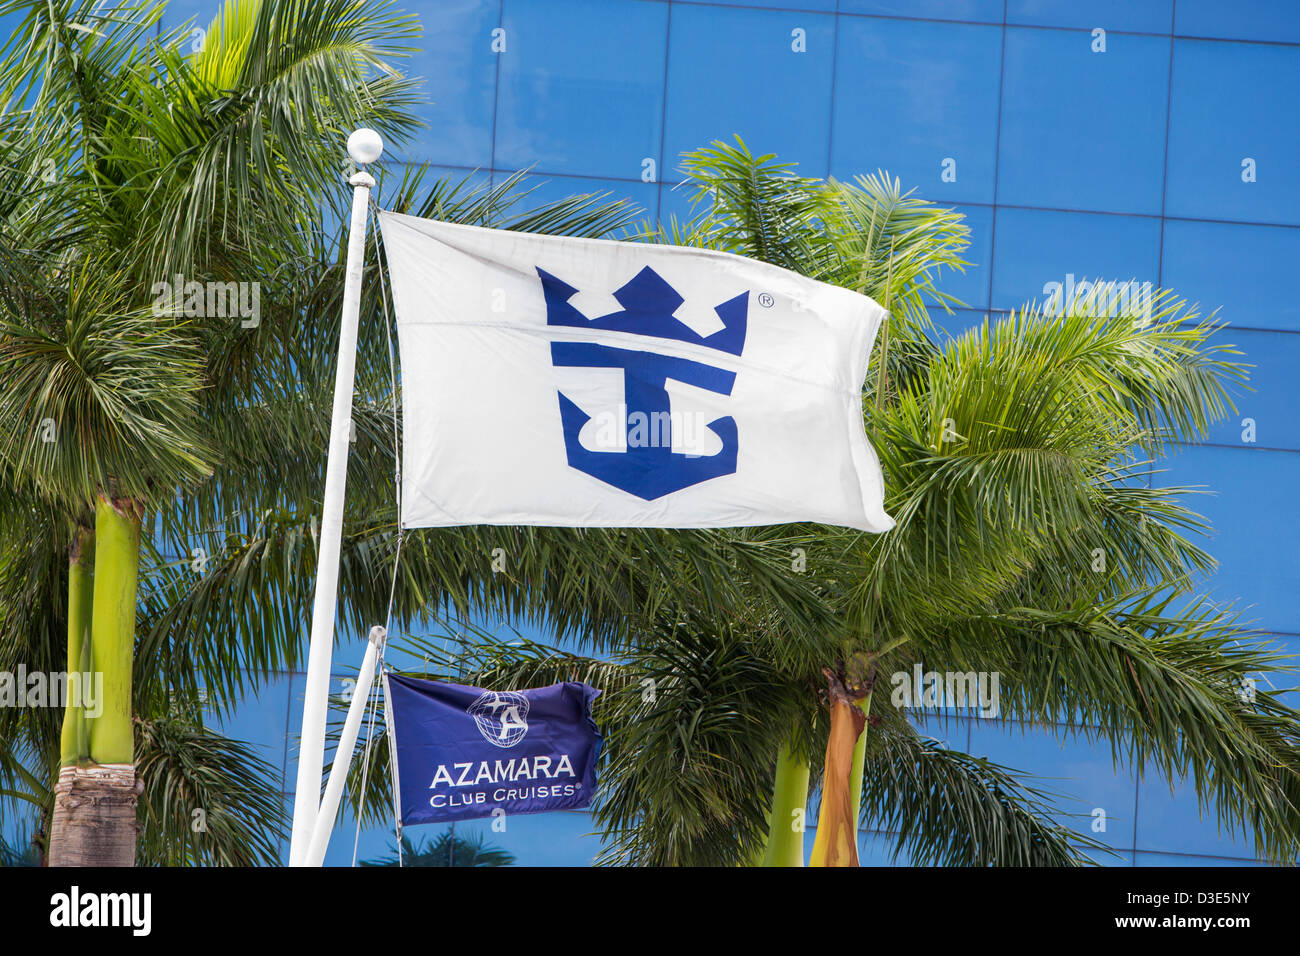 Der Hauptsitz der Reederei Royal Caribbean Cruises Ltd Stockfotografie